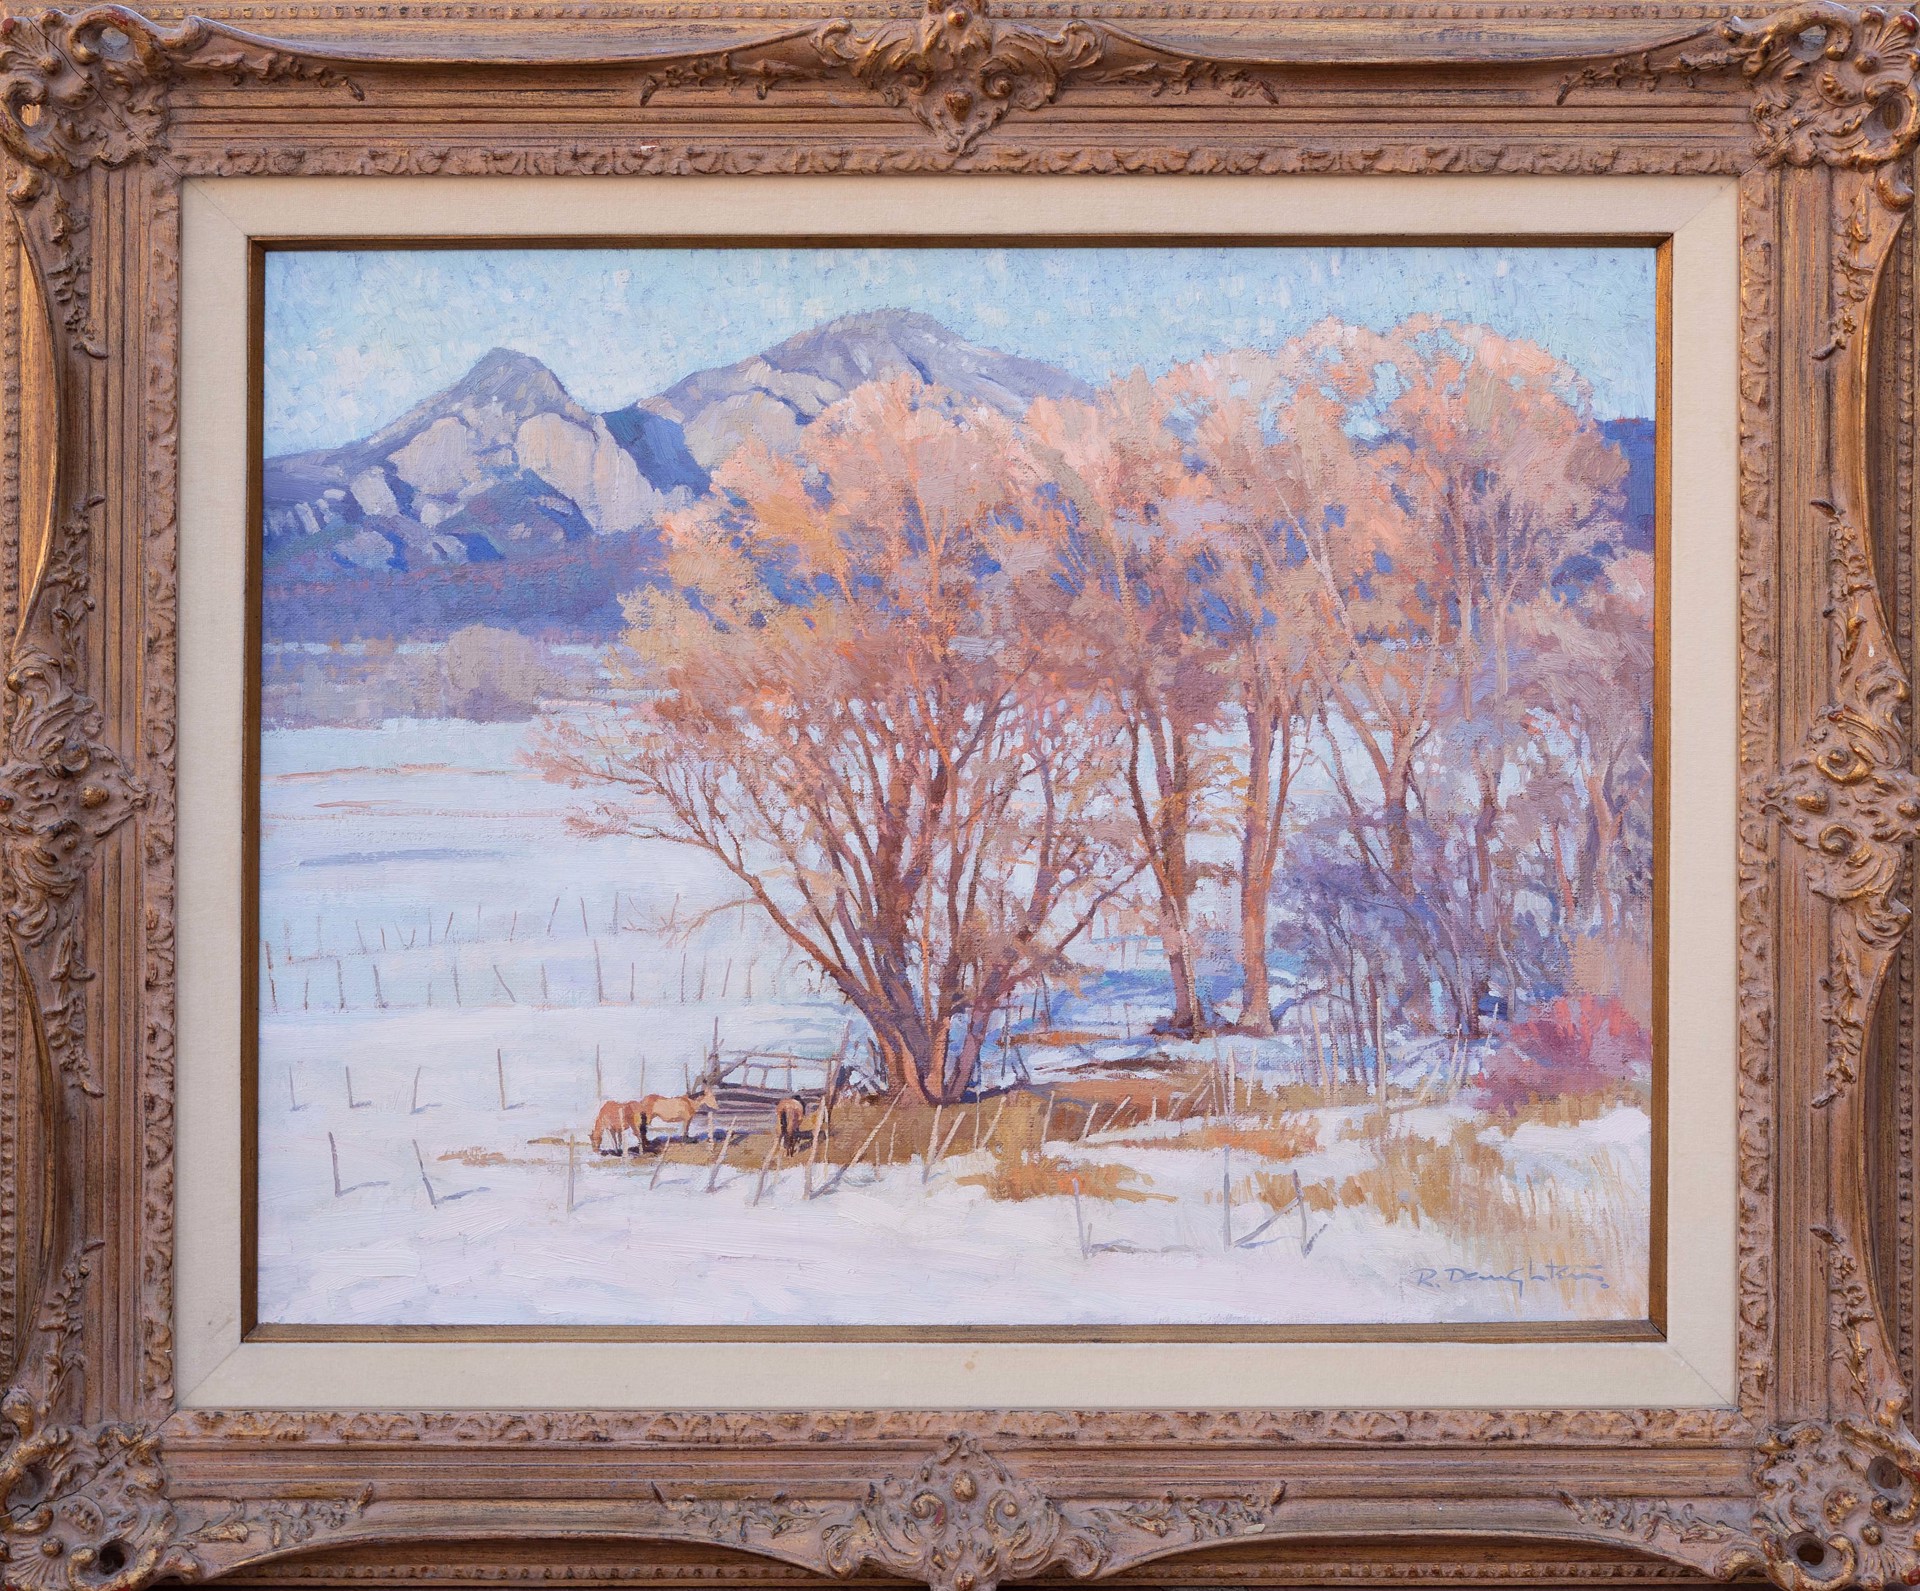 Taos Valley by Robert Daughters (1929-2013)